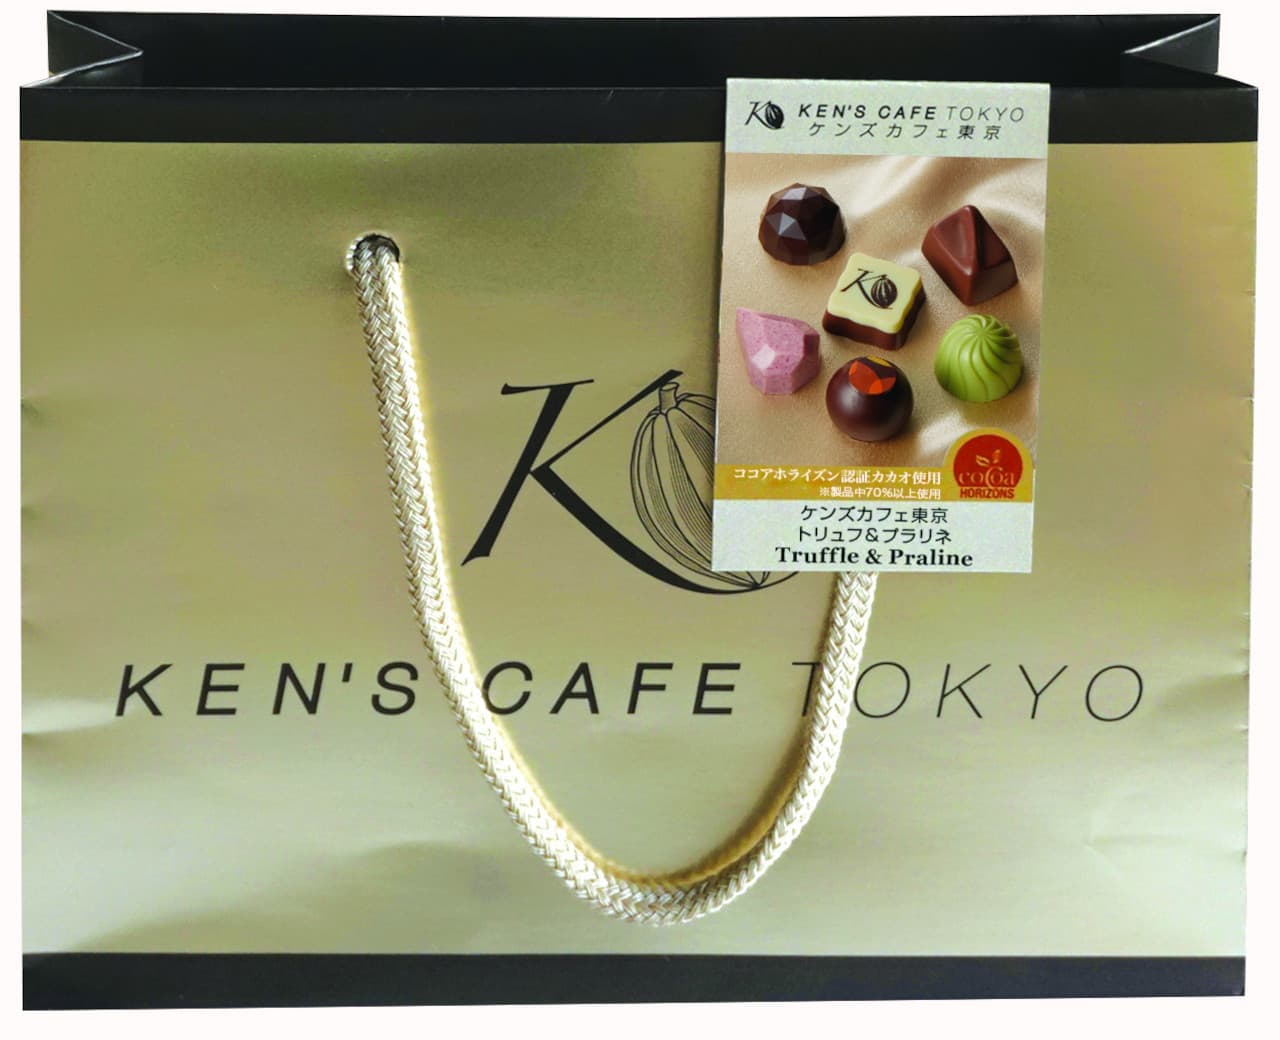 FamilyMart "Ken's Cafe Tokyo Truffle & Praline" shopper